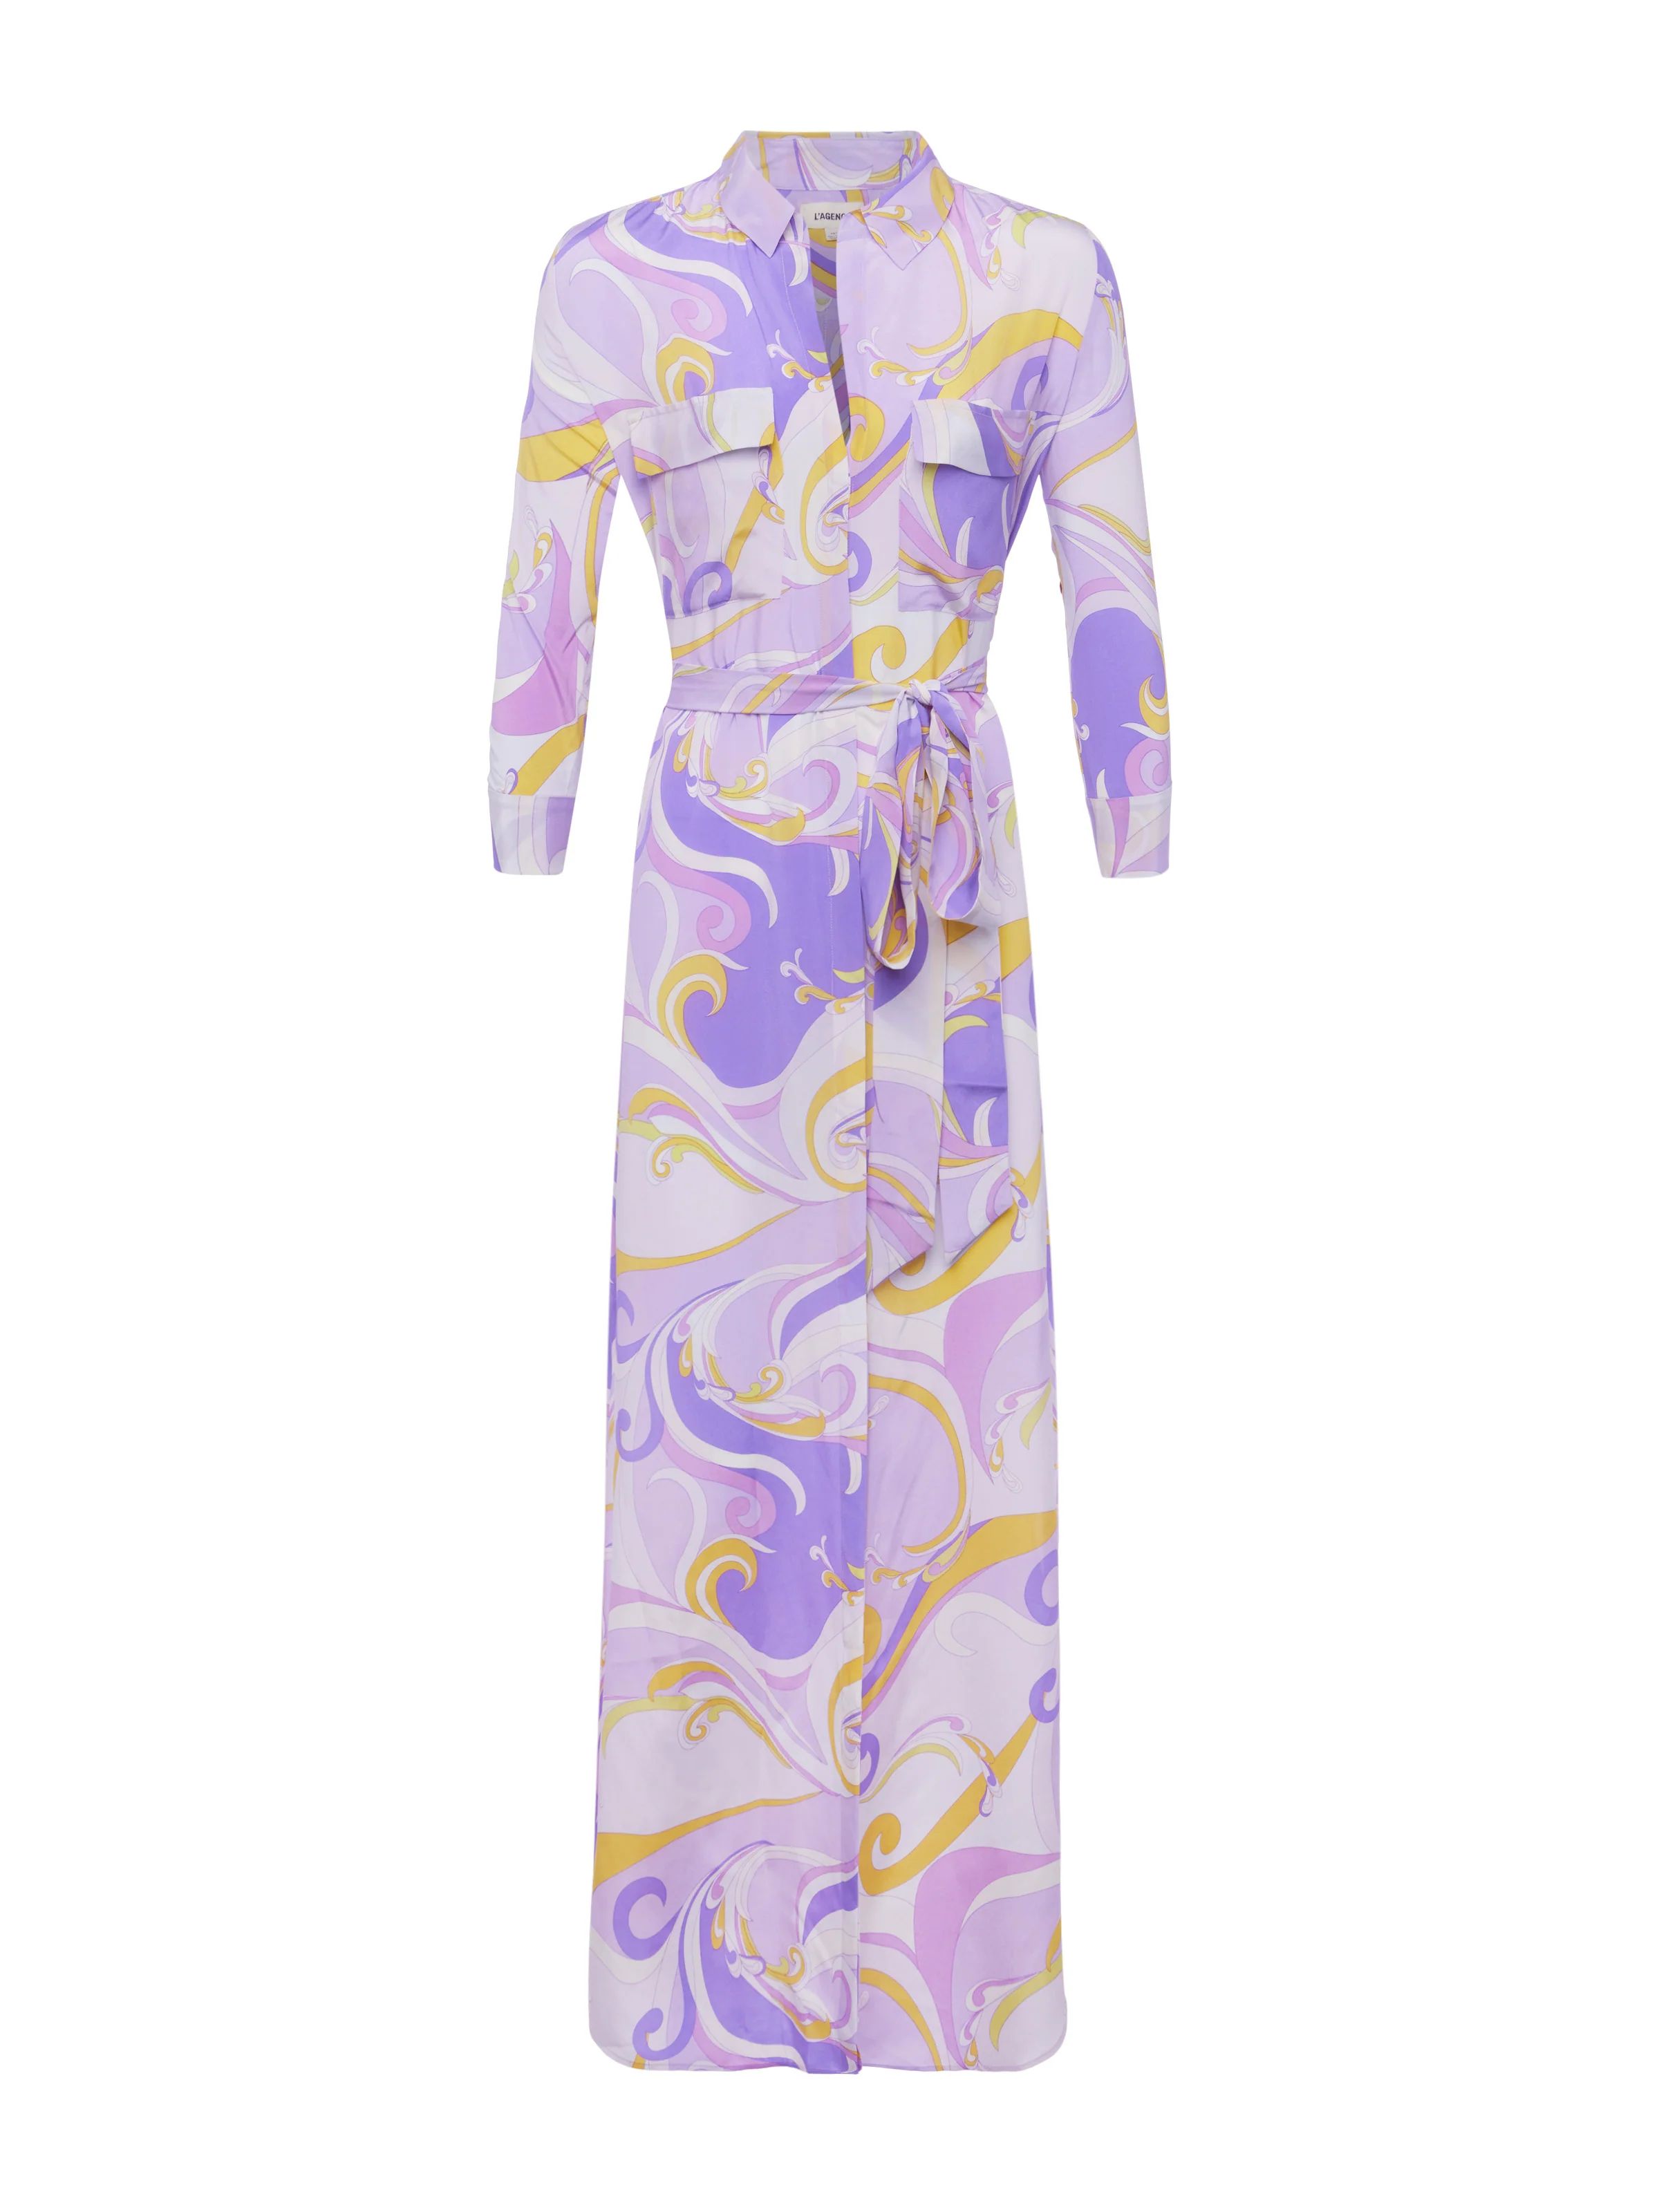 L'AGENCE Cameron Shirt Dress in Light Orchid Multi Saint Martin | L'Agence